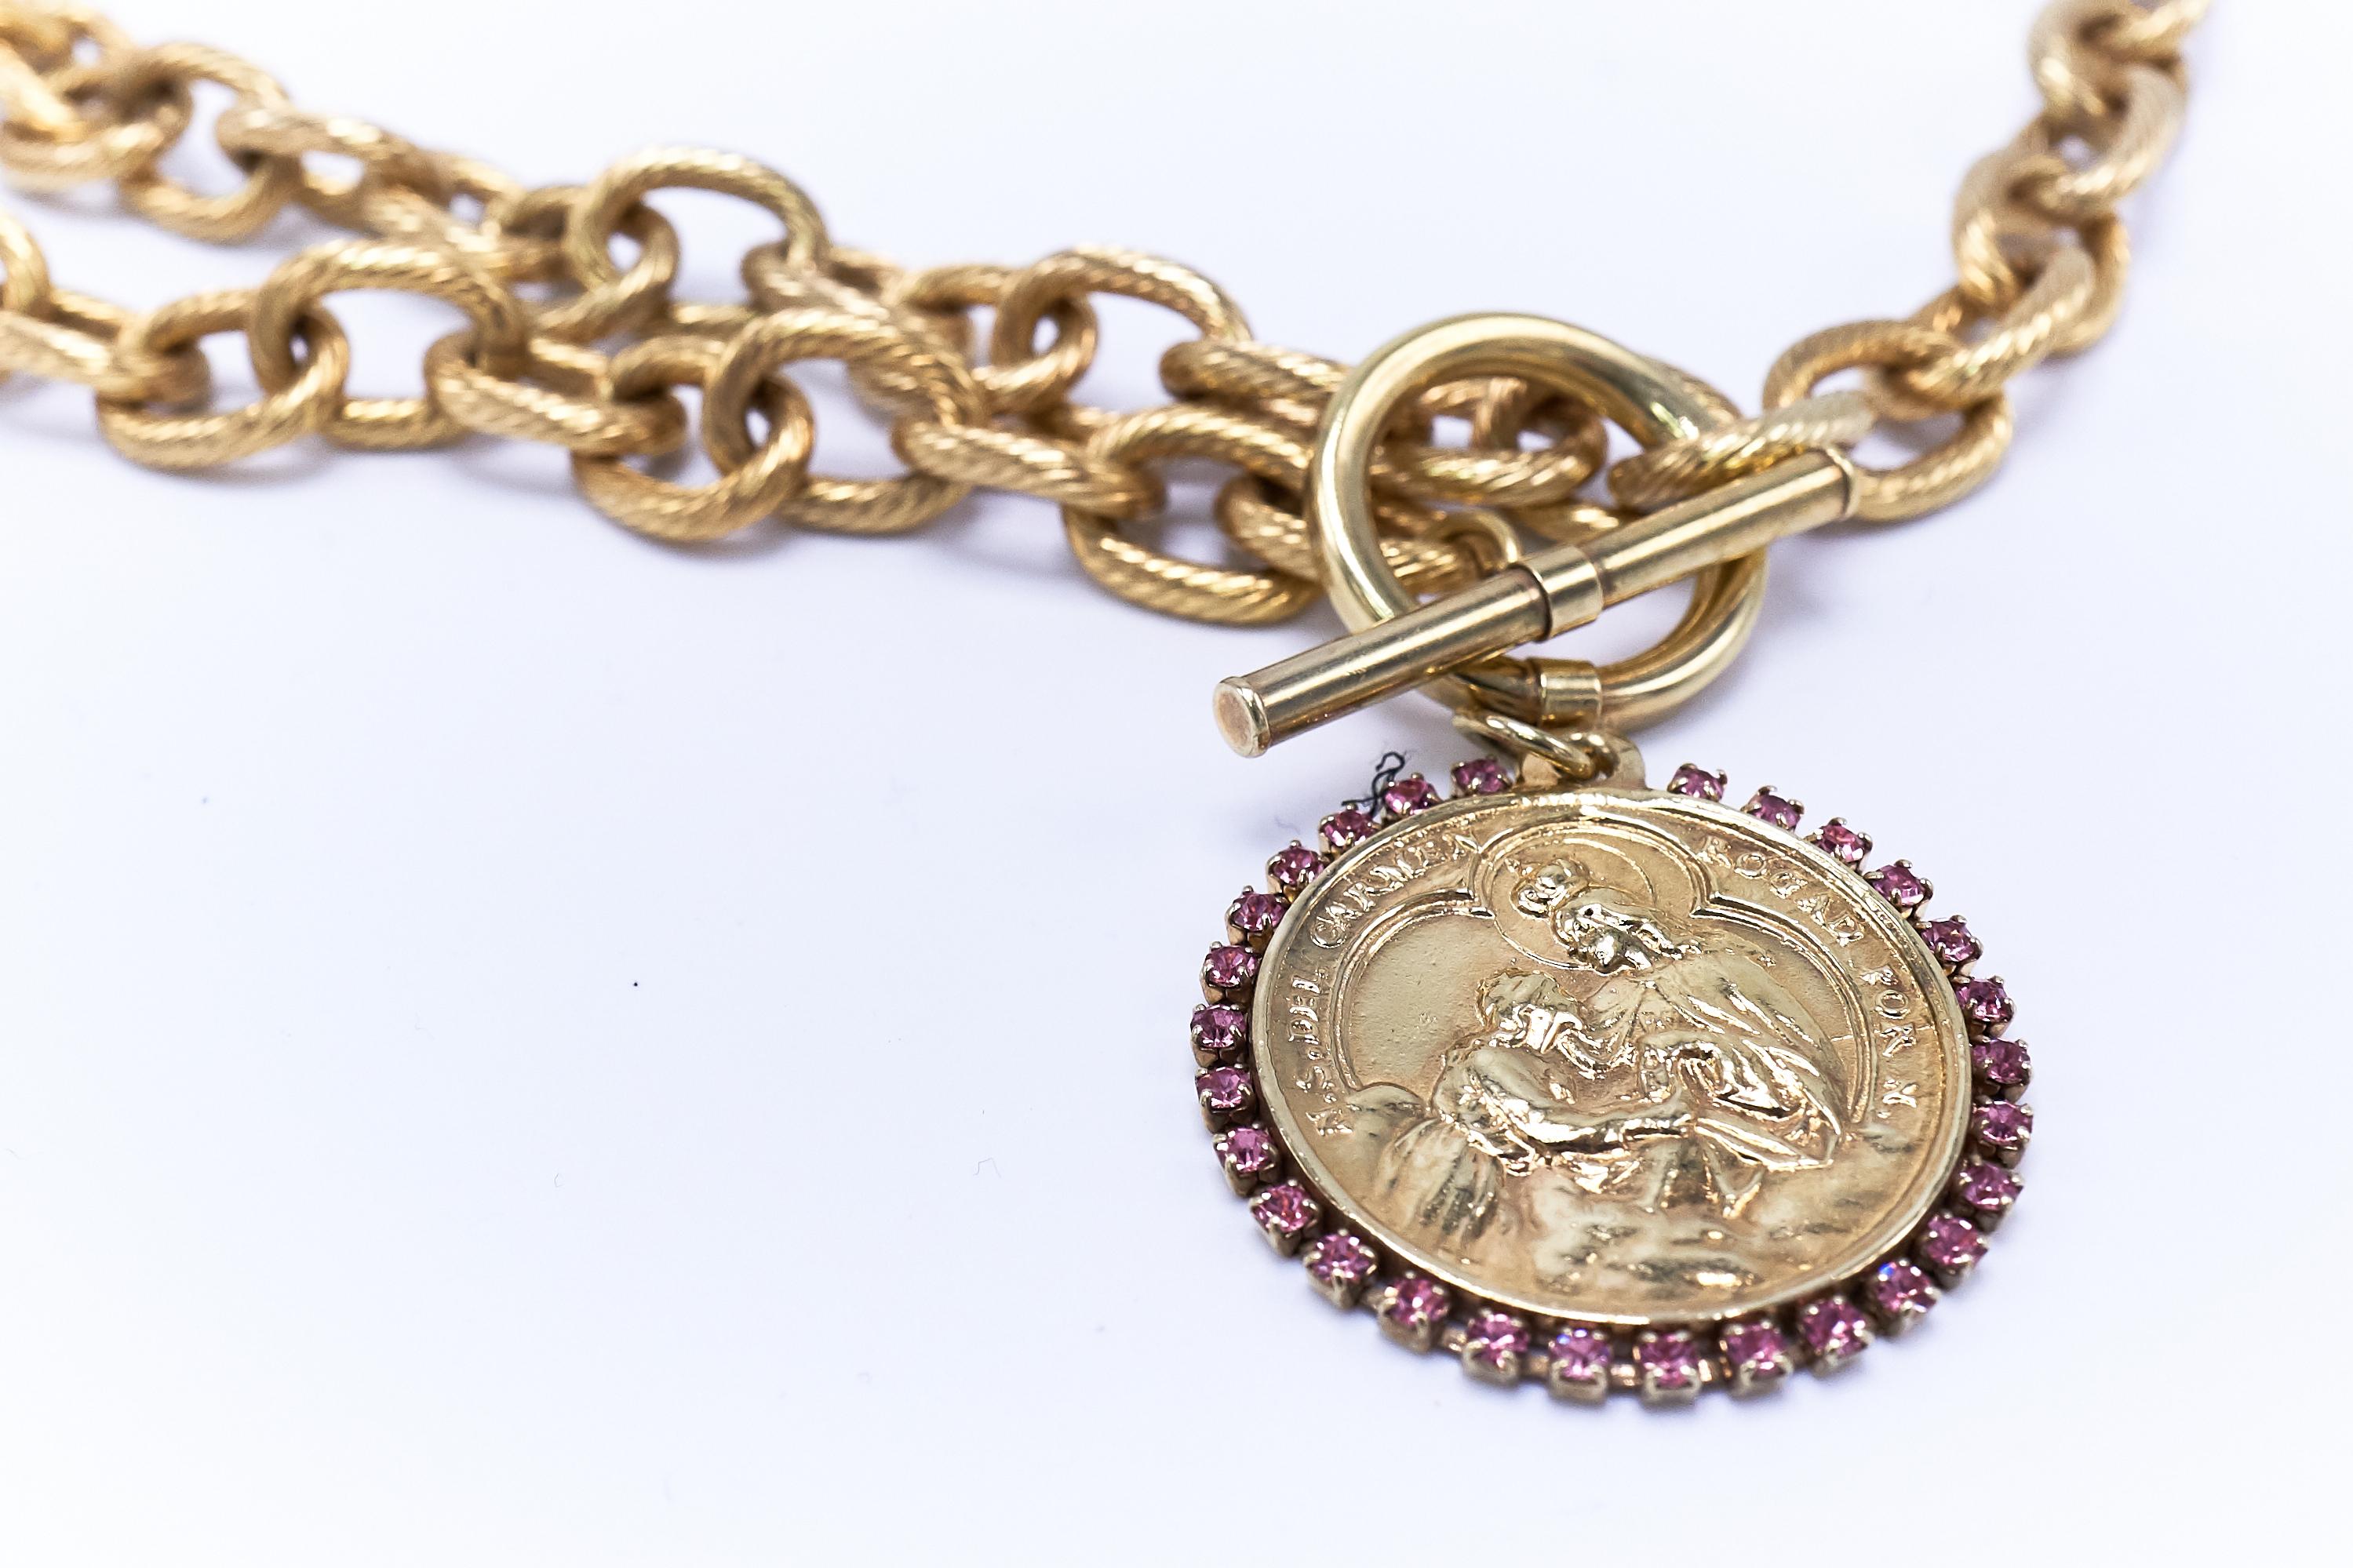 Chunky Chain Choker Halskette Medaille Strass vergoldet Anhänger J Dauphin

J DAUPHIN Halskette 